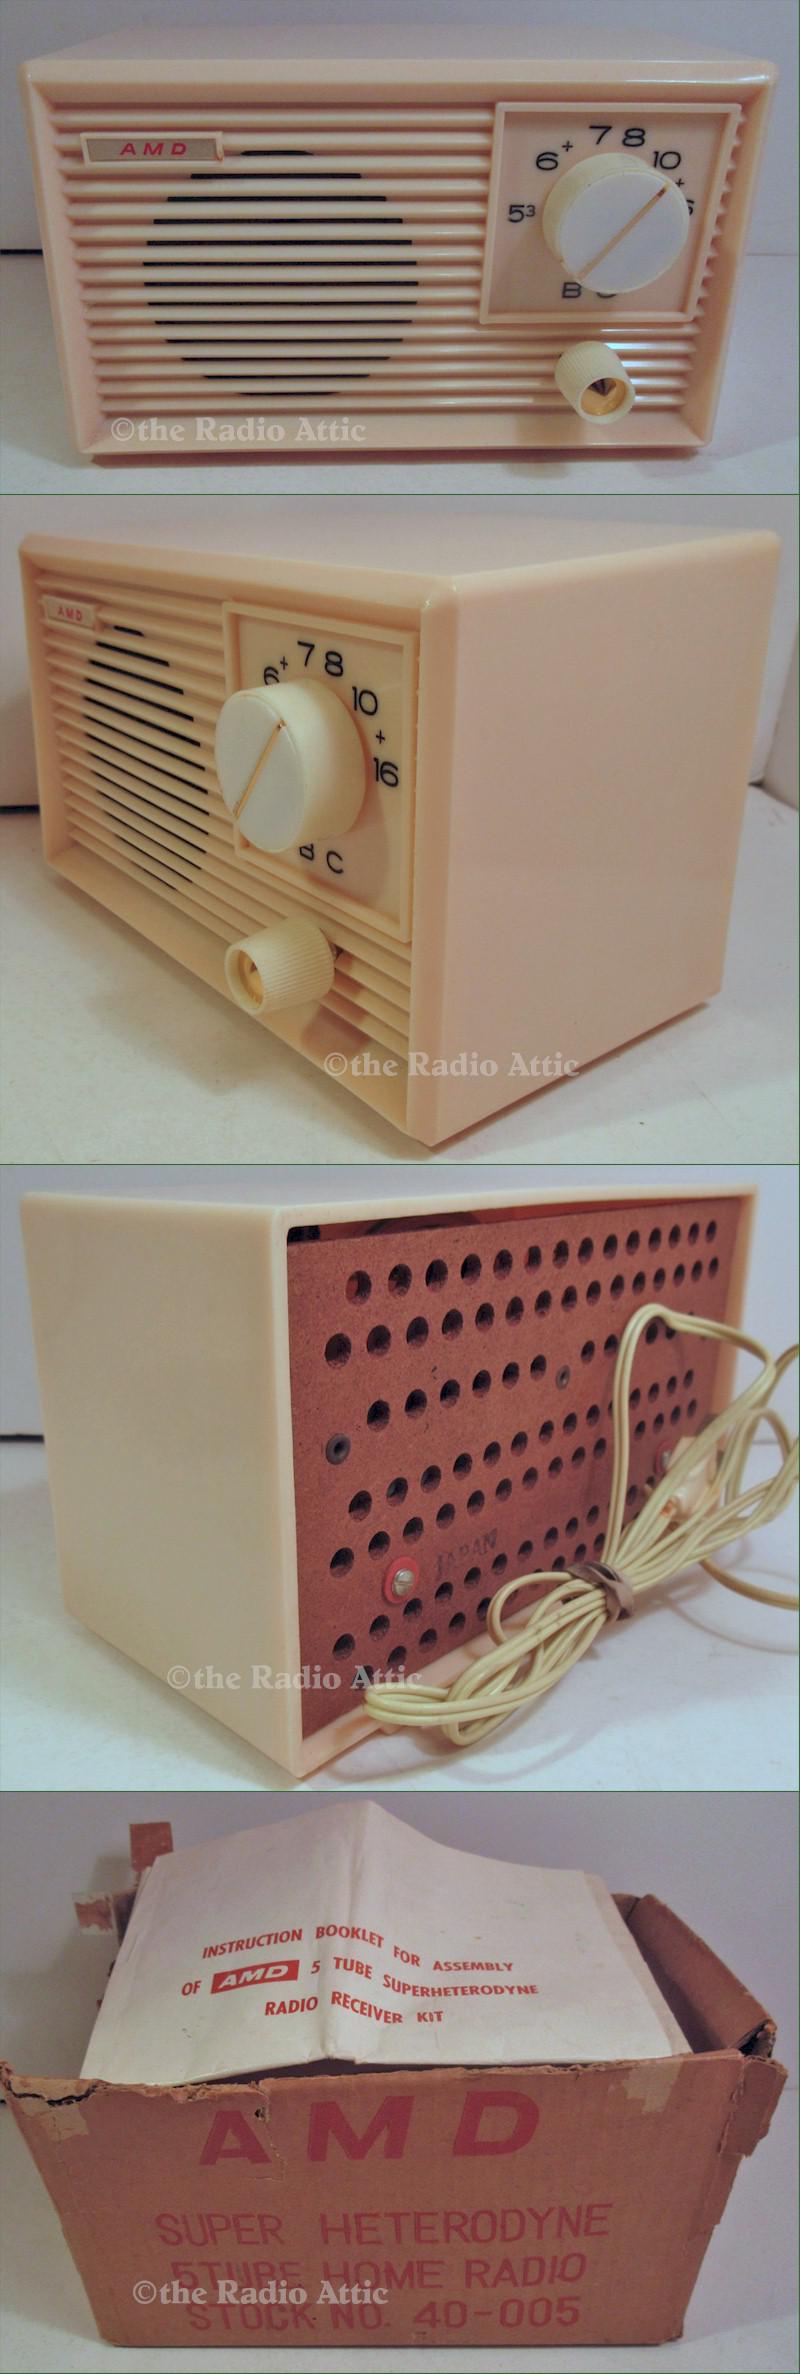 AMD Radio Kit (Early 1960s)